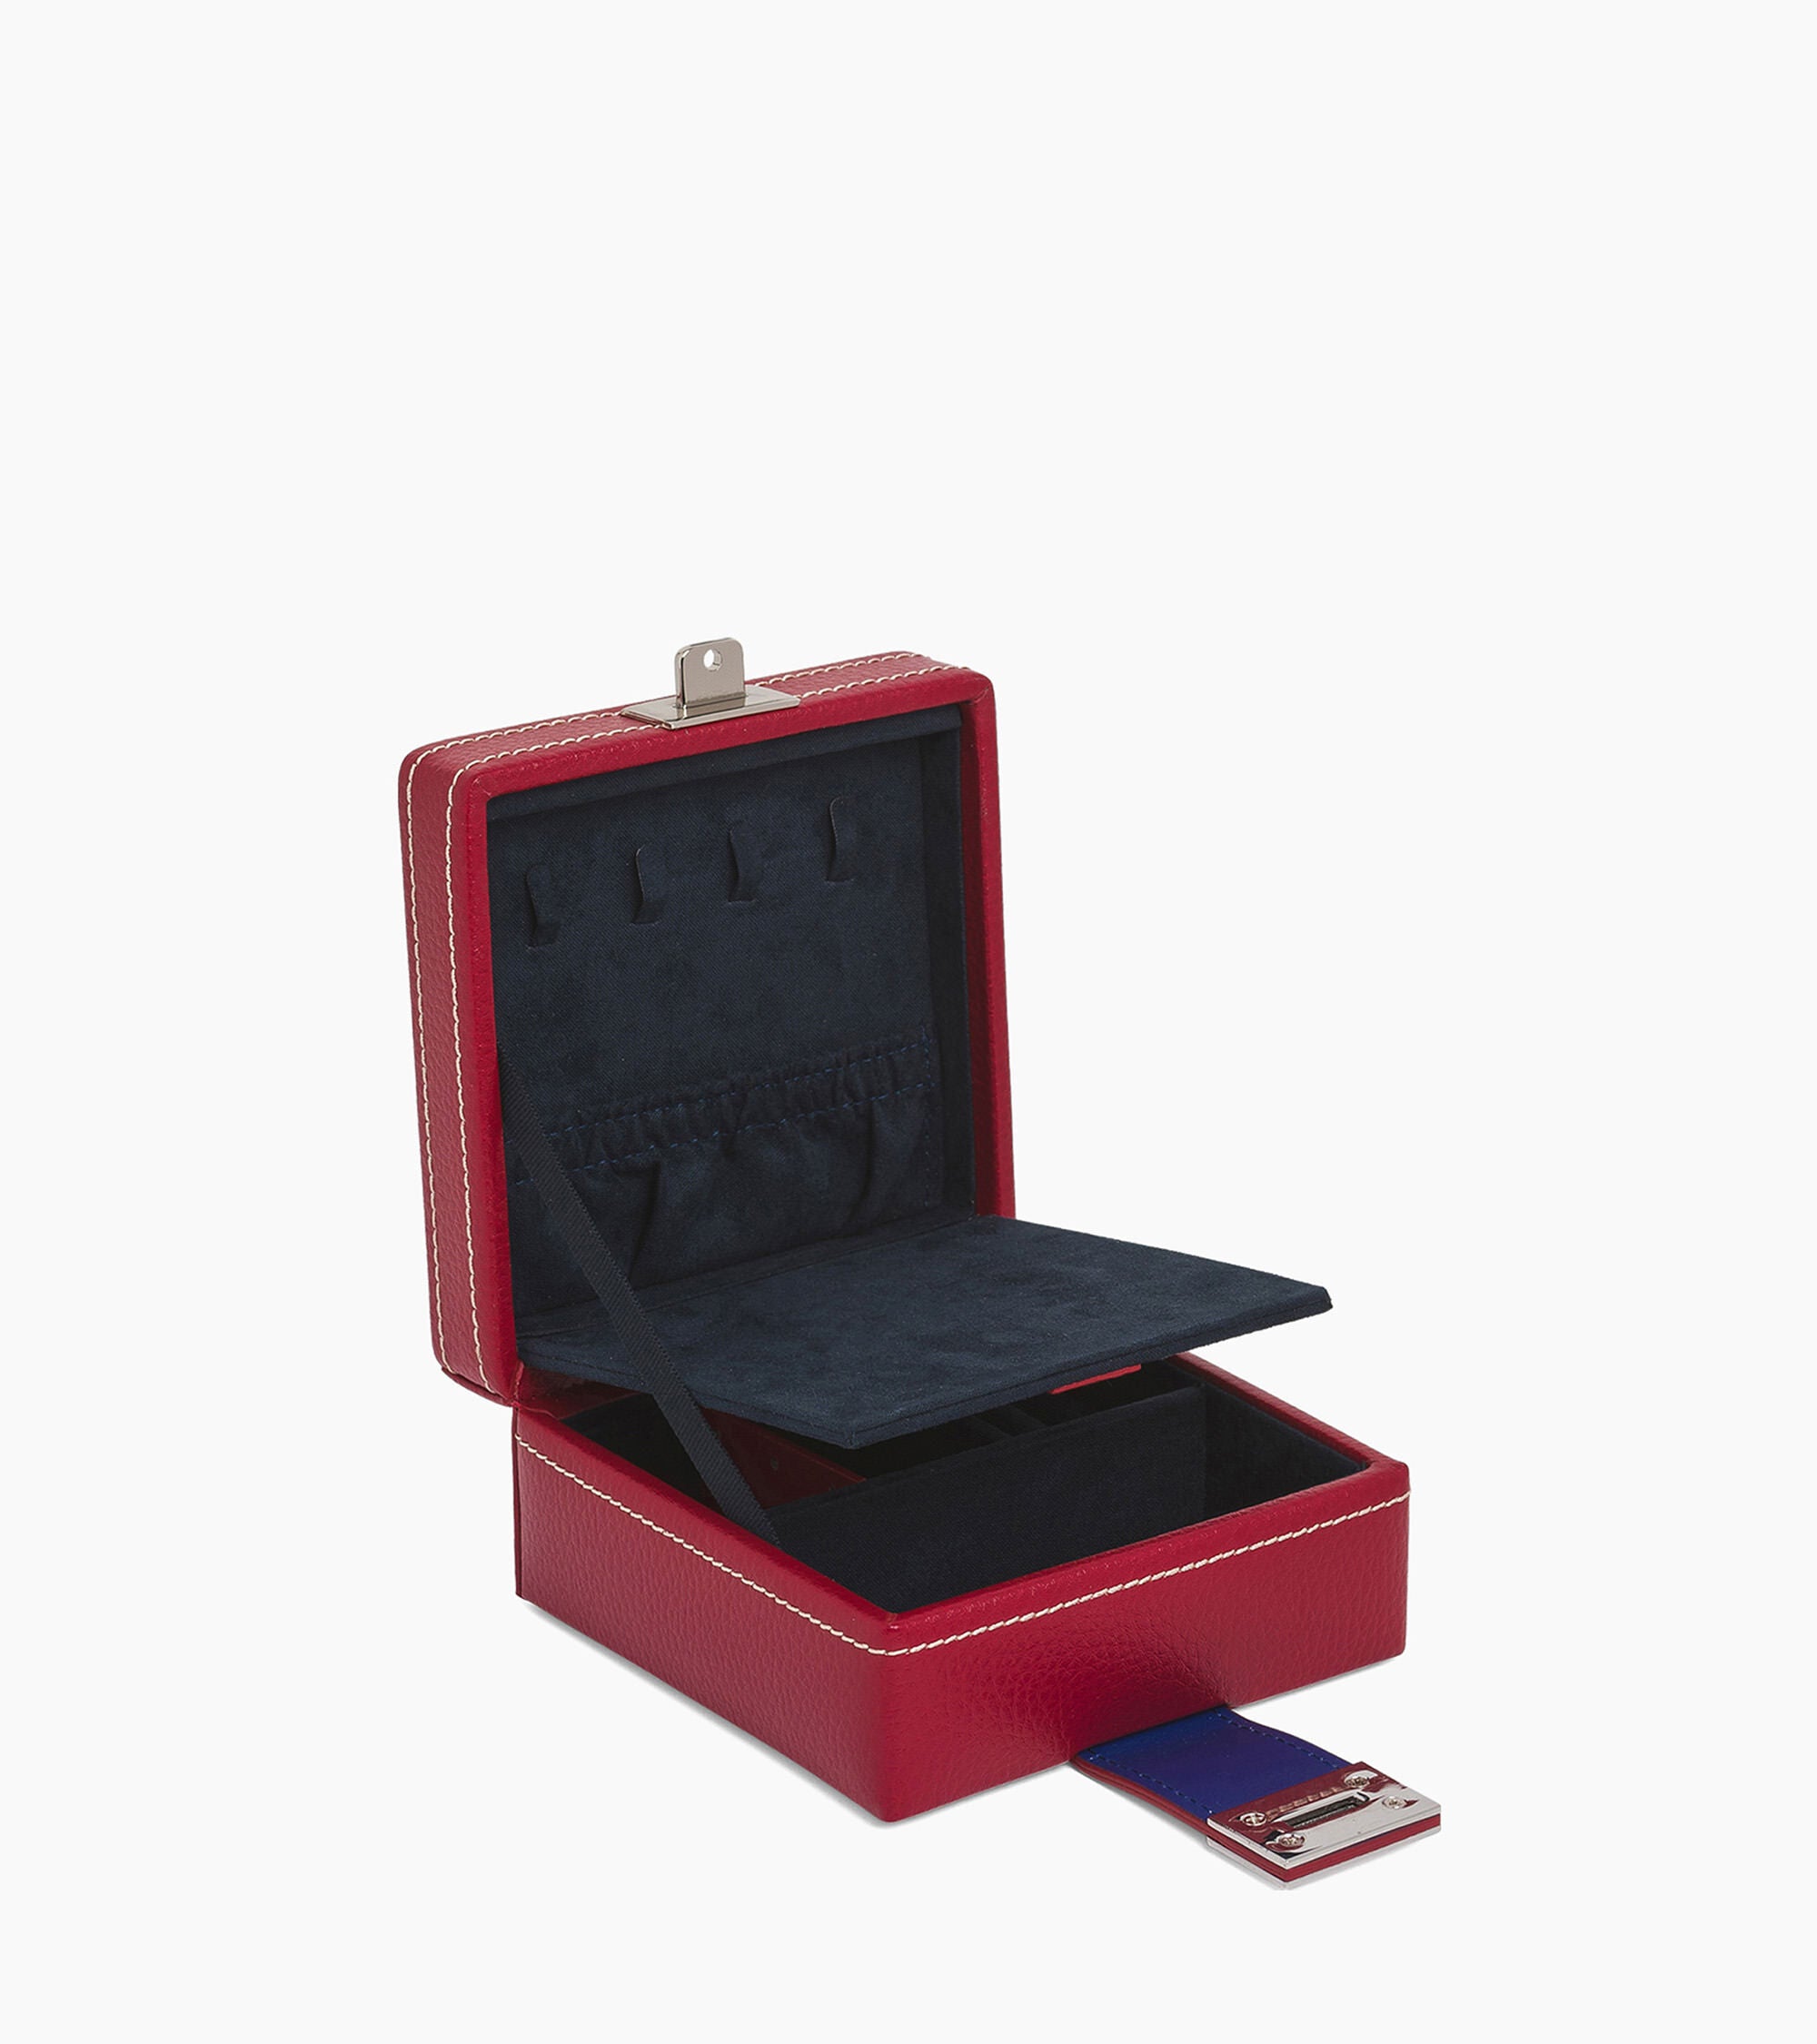 Small jewelry case